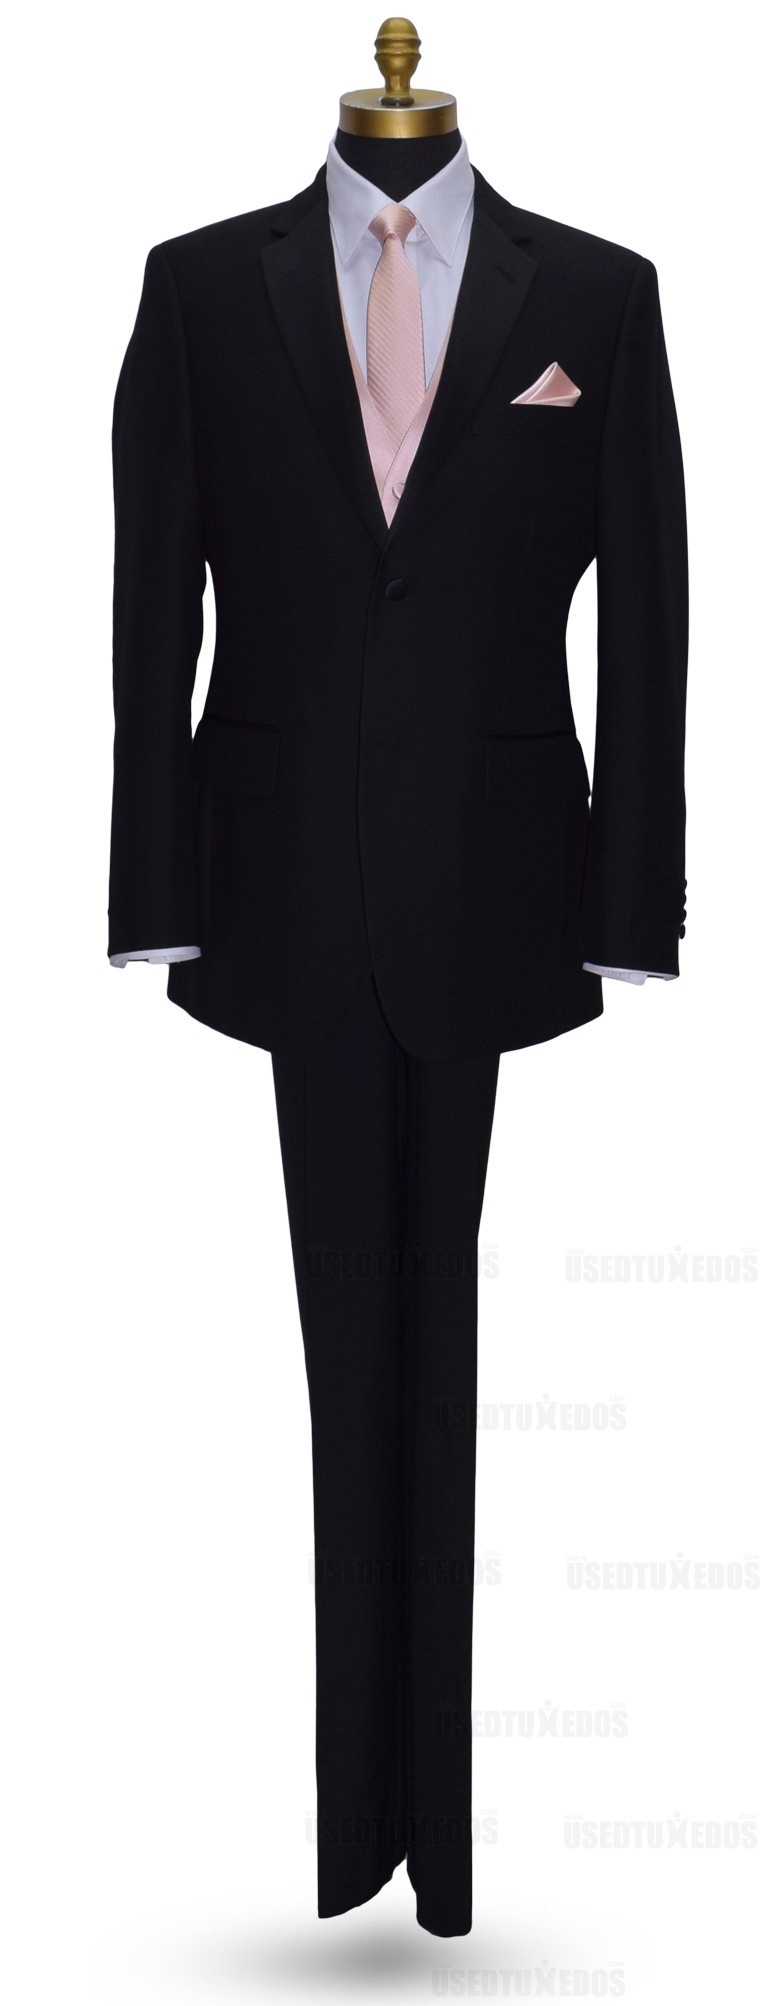 blush long tie and vest on black tuxedo at tuxbling.com